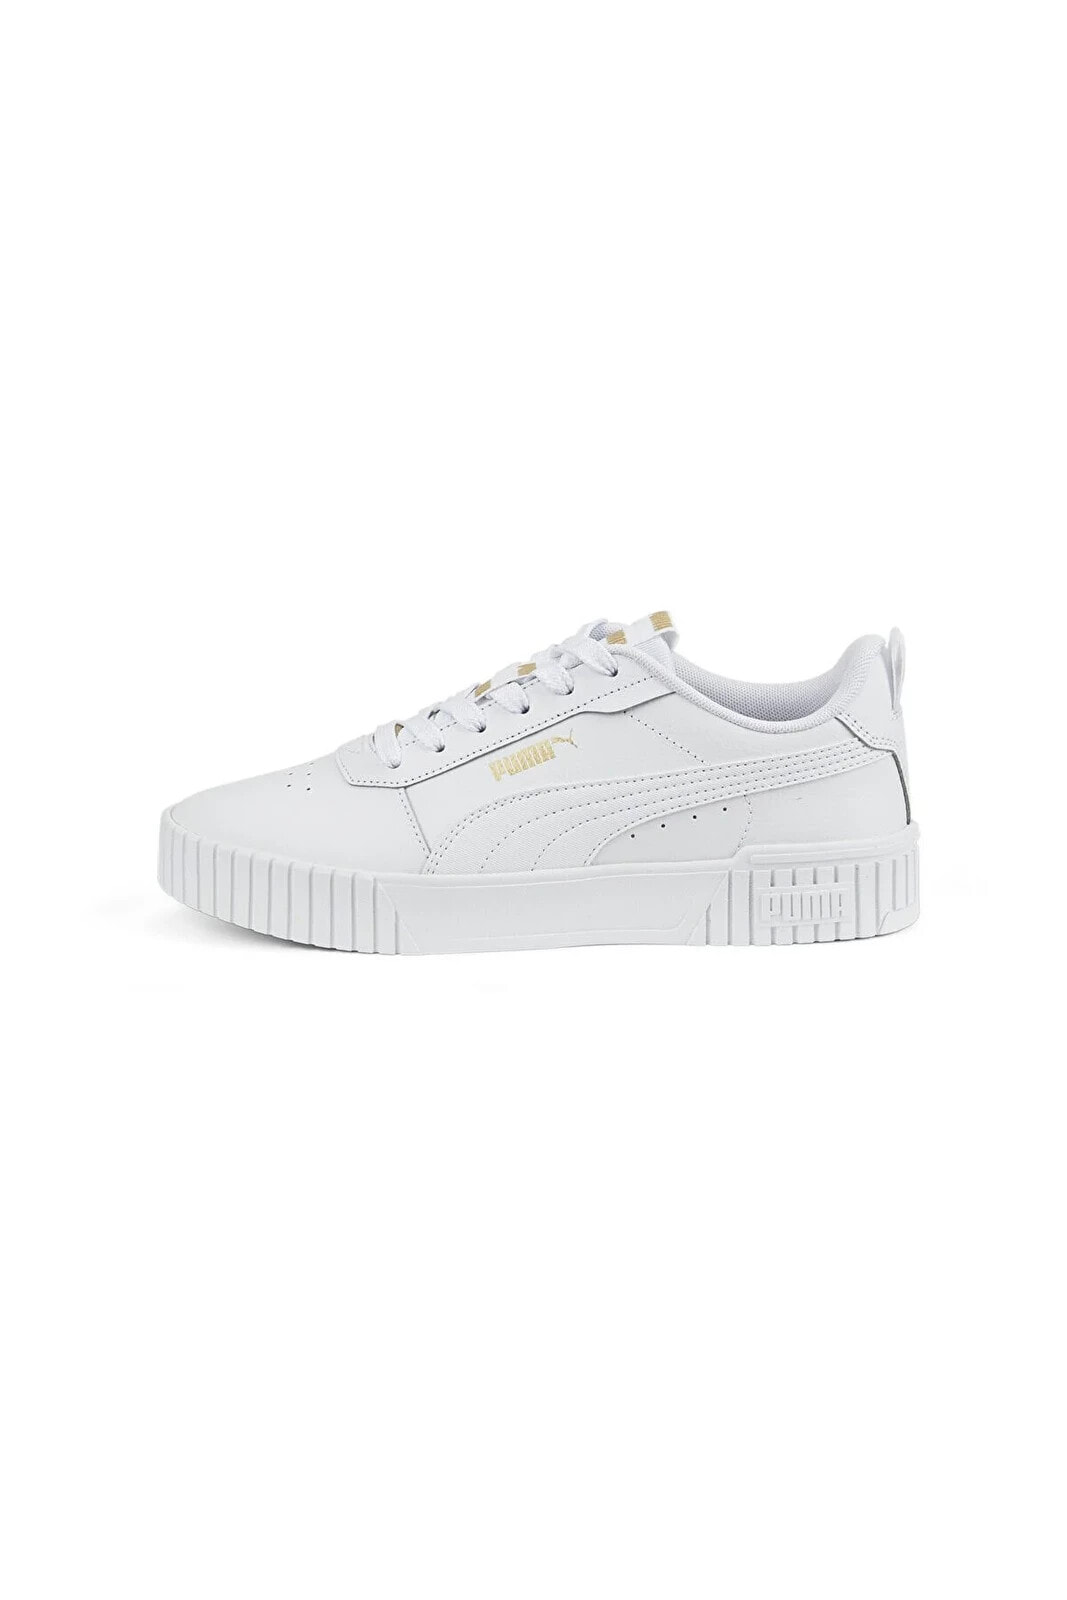 Kadın Sneaker - Carina 2.0 Tape Puma White-Puma White-Pu - 38585001